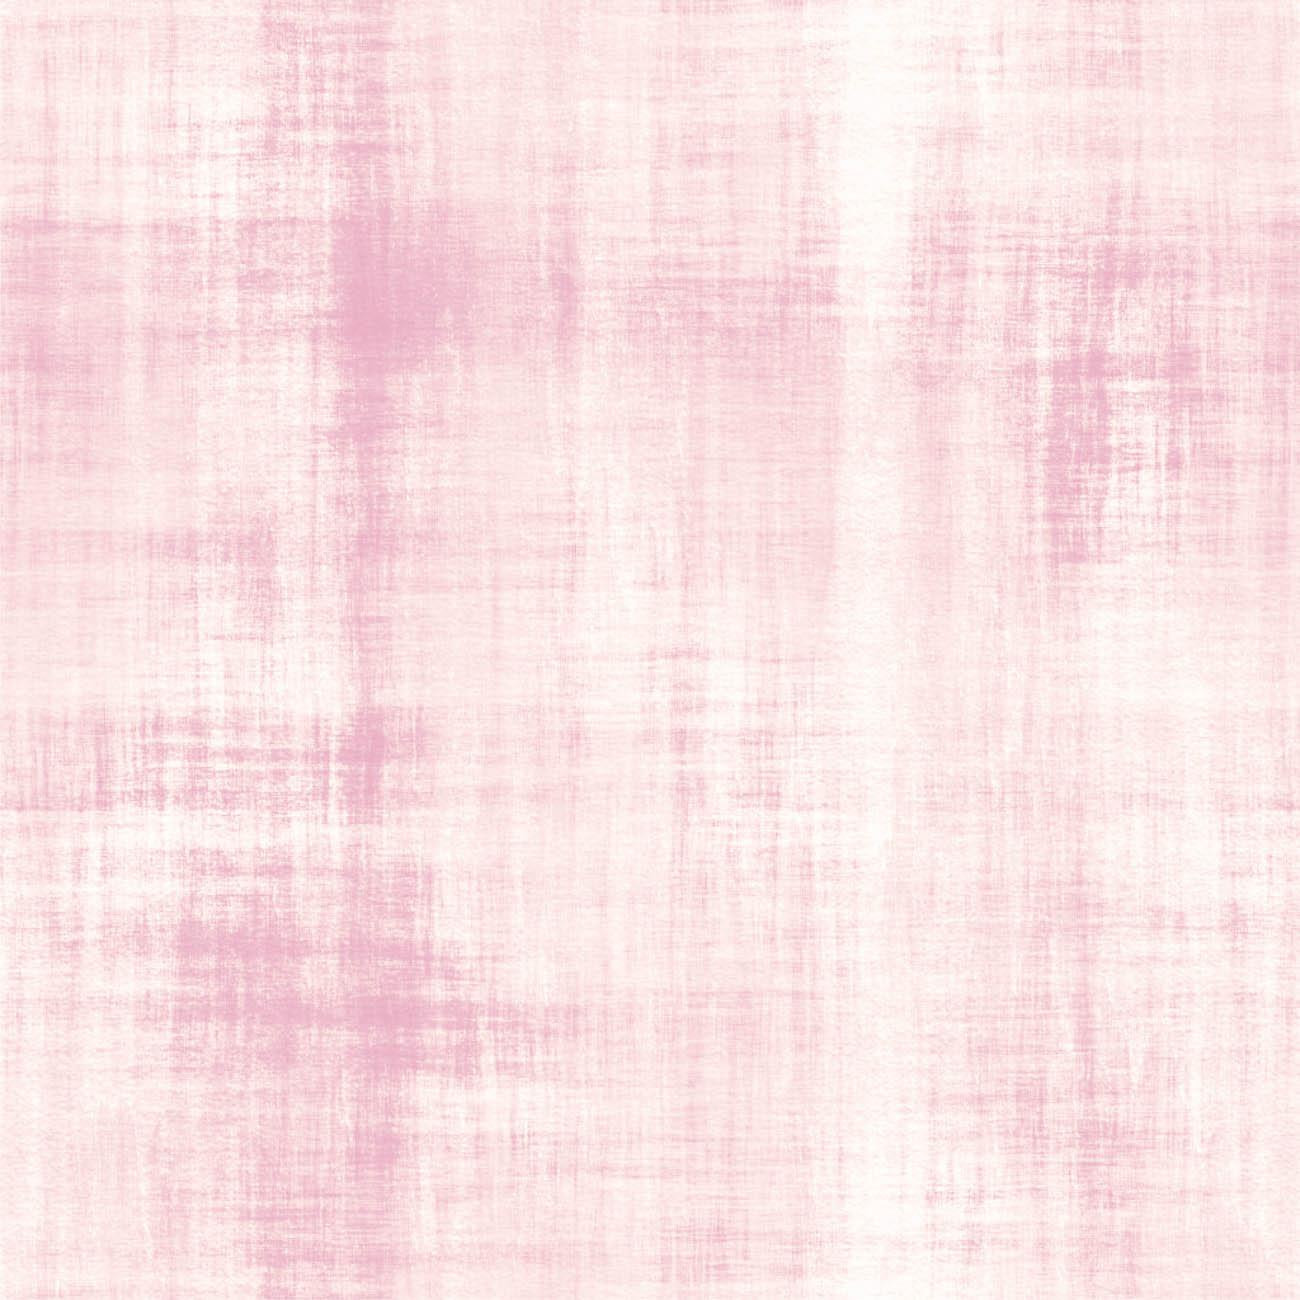 ACID WASH PAT. 2 (pale pink)